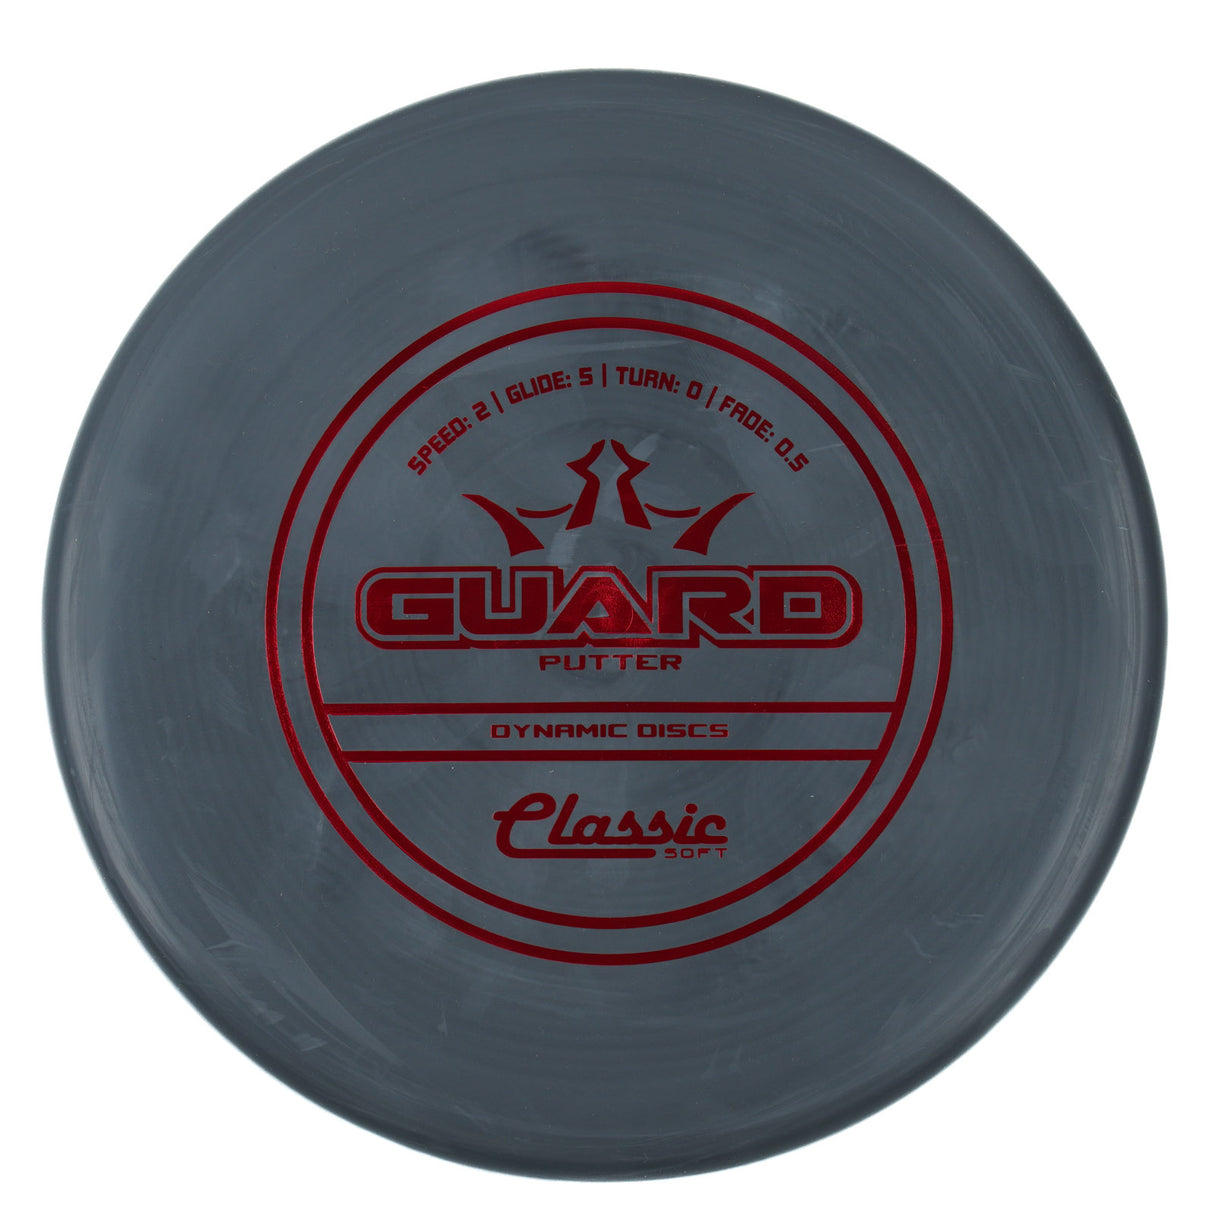 Dynamic Discs Guard - Classic Soft 174g | Style 0001